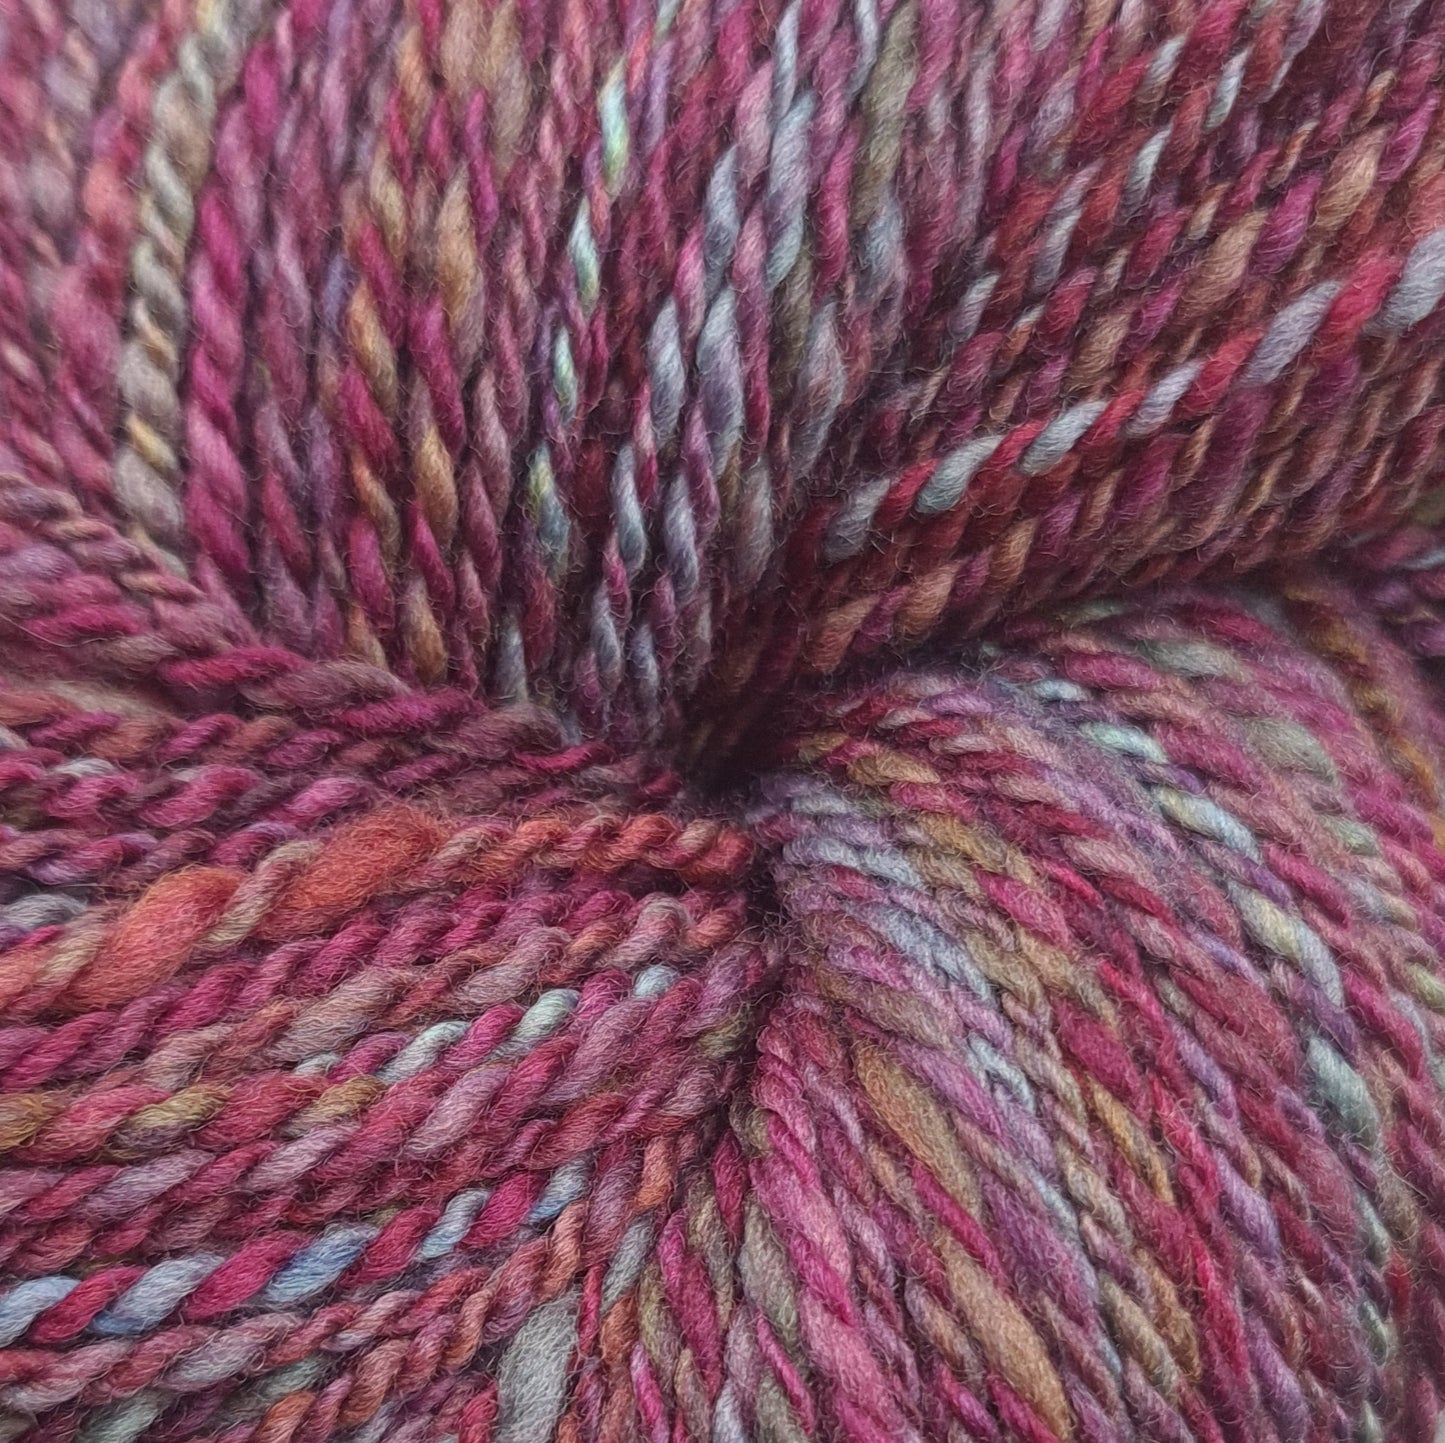 Handspun Worsted/Aran yarn, 119g skein, Kettle dyed Merino Wool, Autumn Mix OOAK